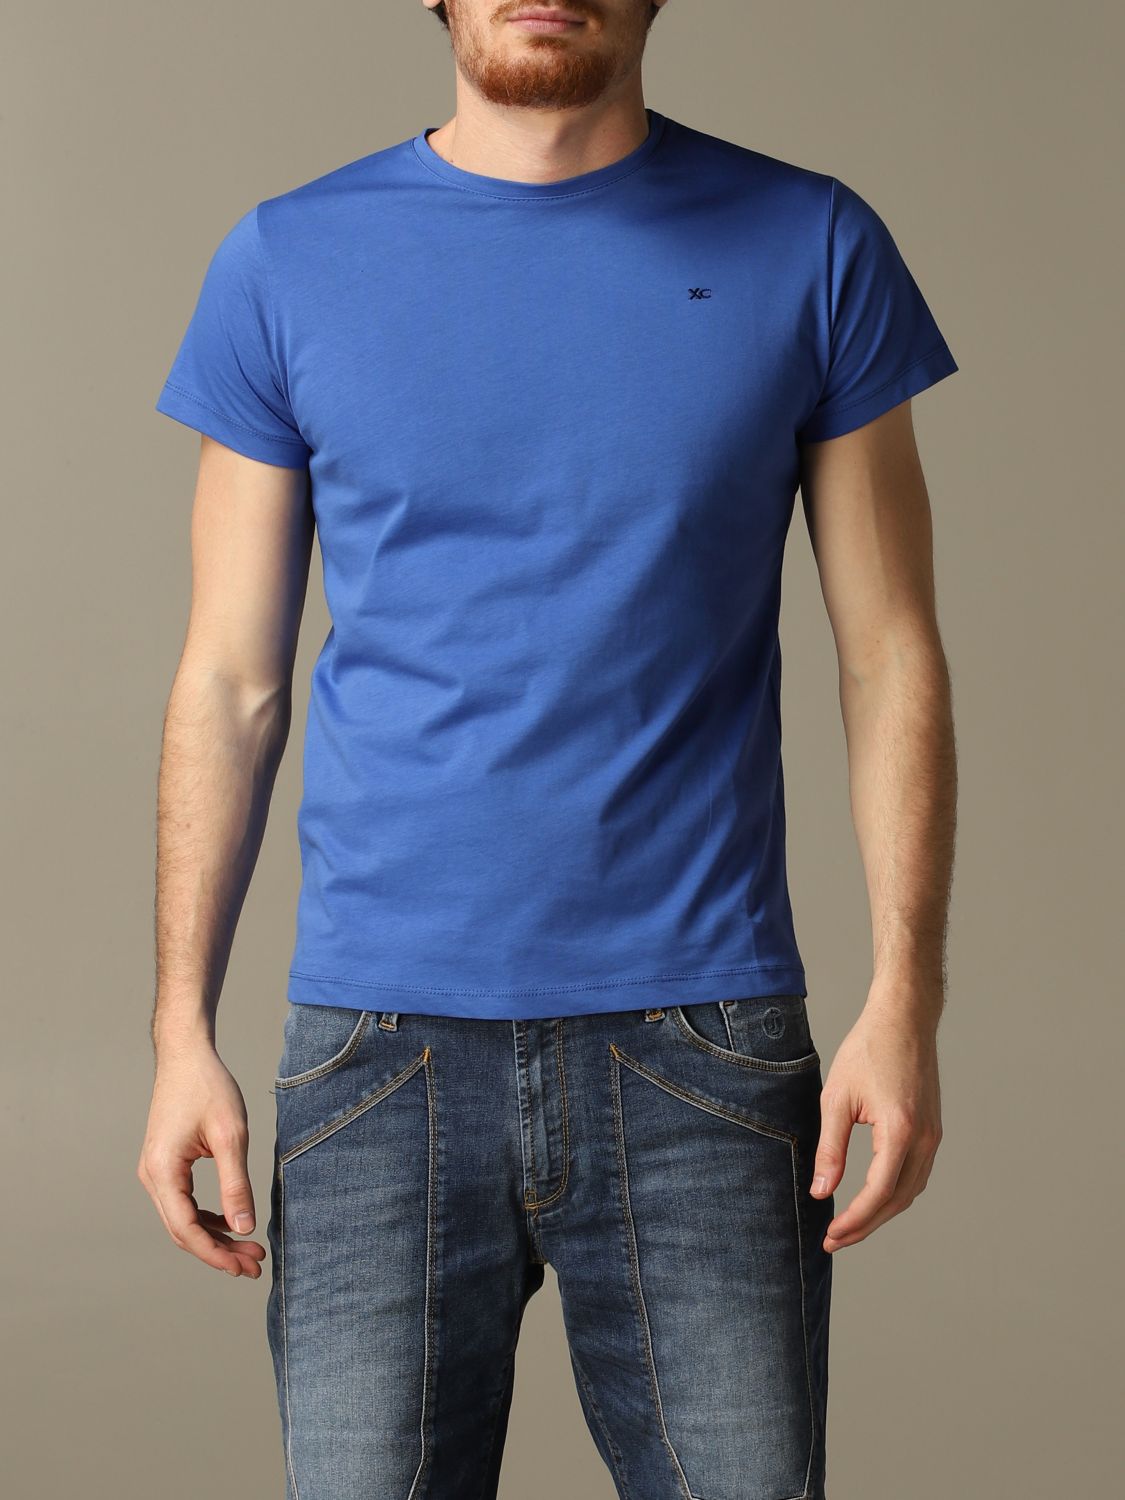 Xc Outlet: t-shirt for man - Royal Blue | Xc t-shirt T-SHIRT M online